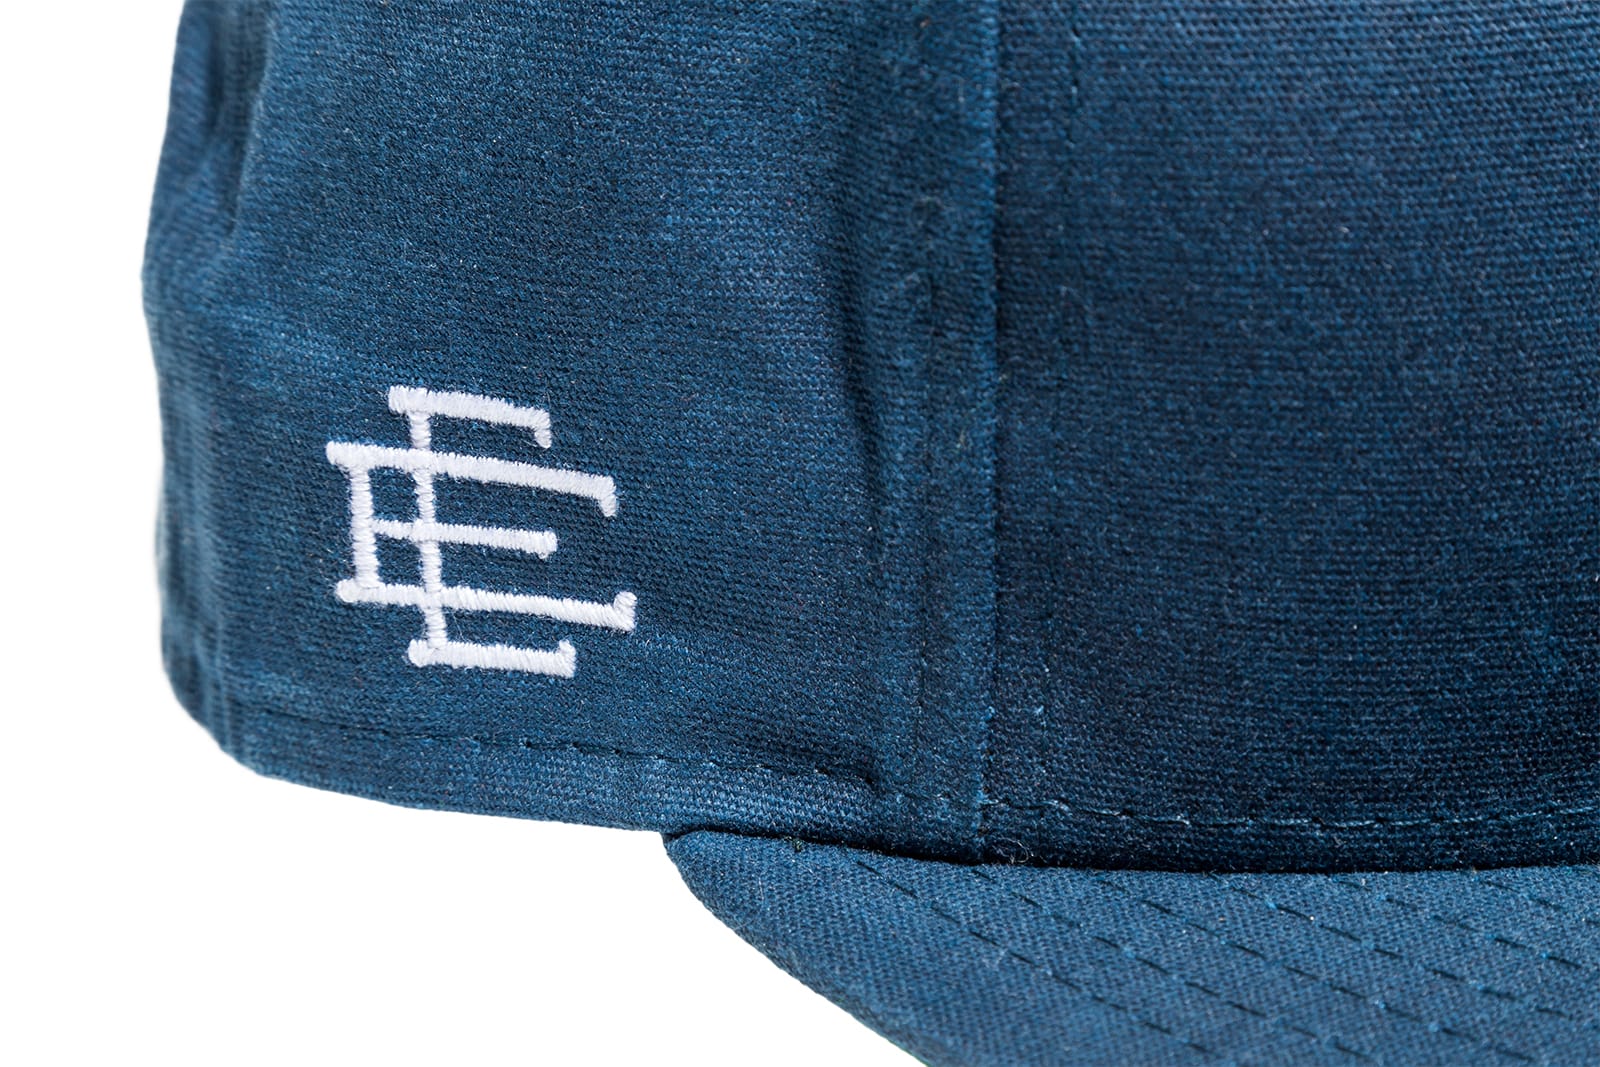 Eric Emanuel New Era Hats in Waxed Canvas | Hypebeast